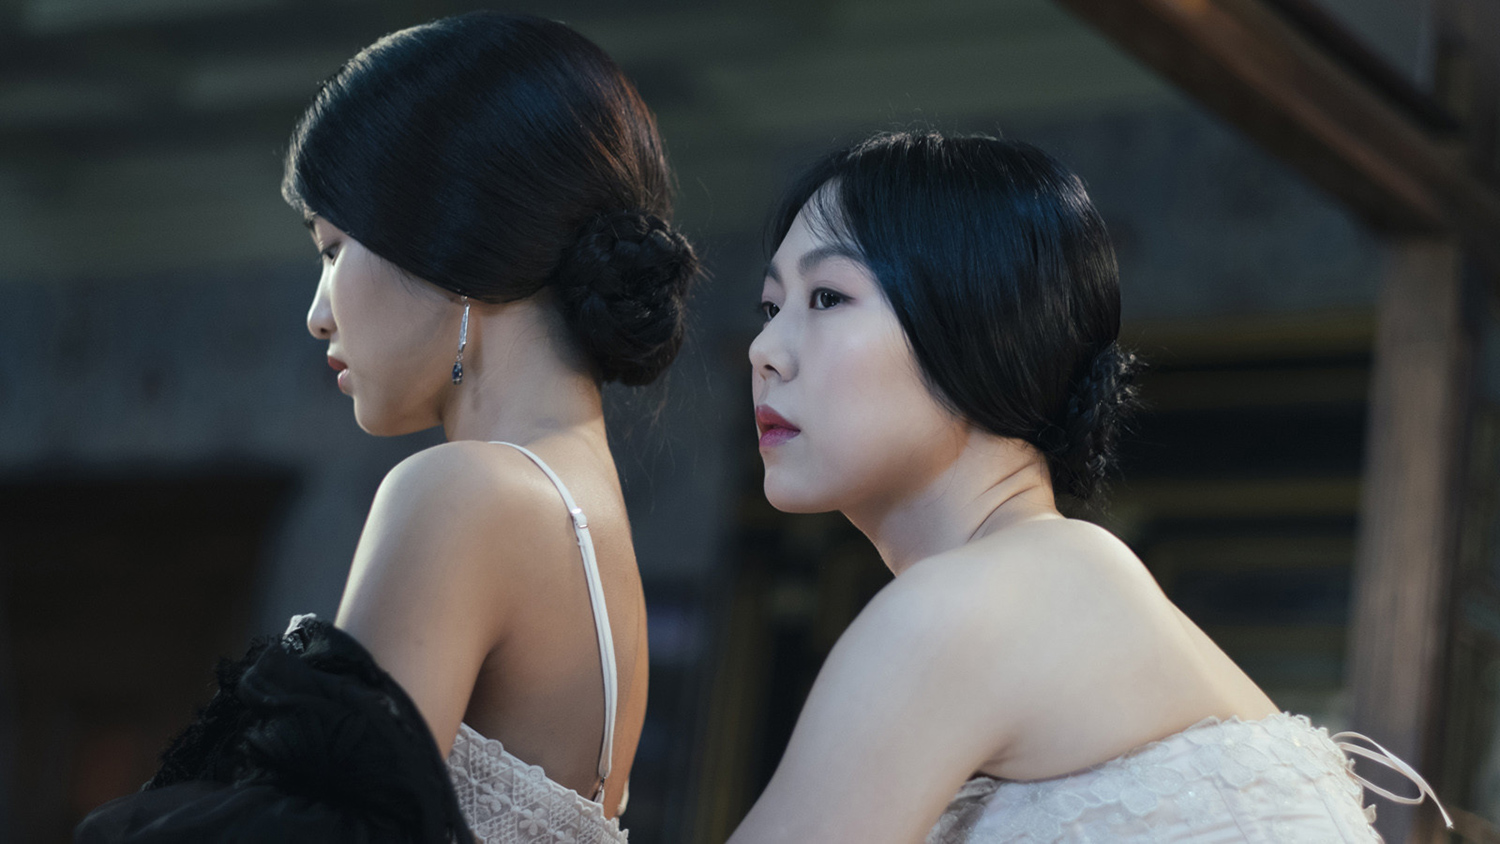 Dark Korean Erotic Films - The Handmaiden, two women